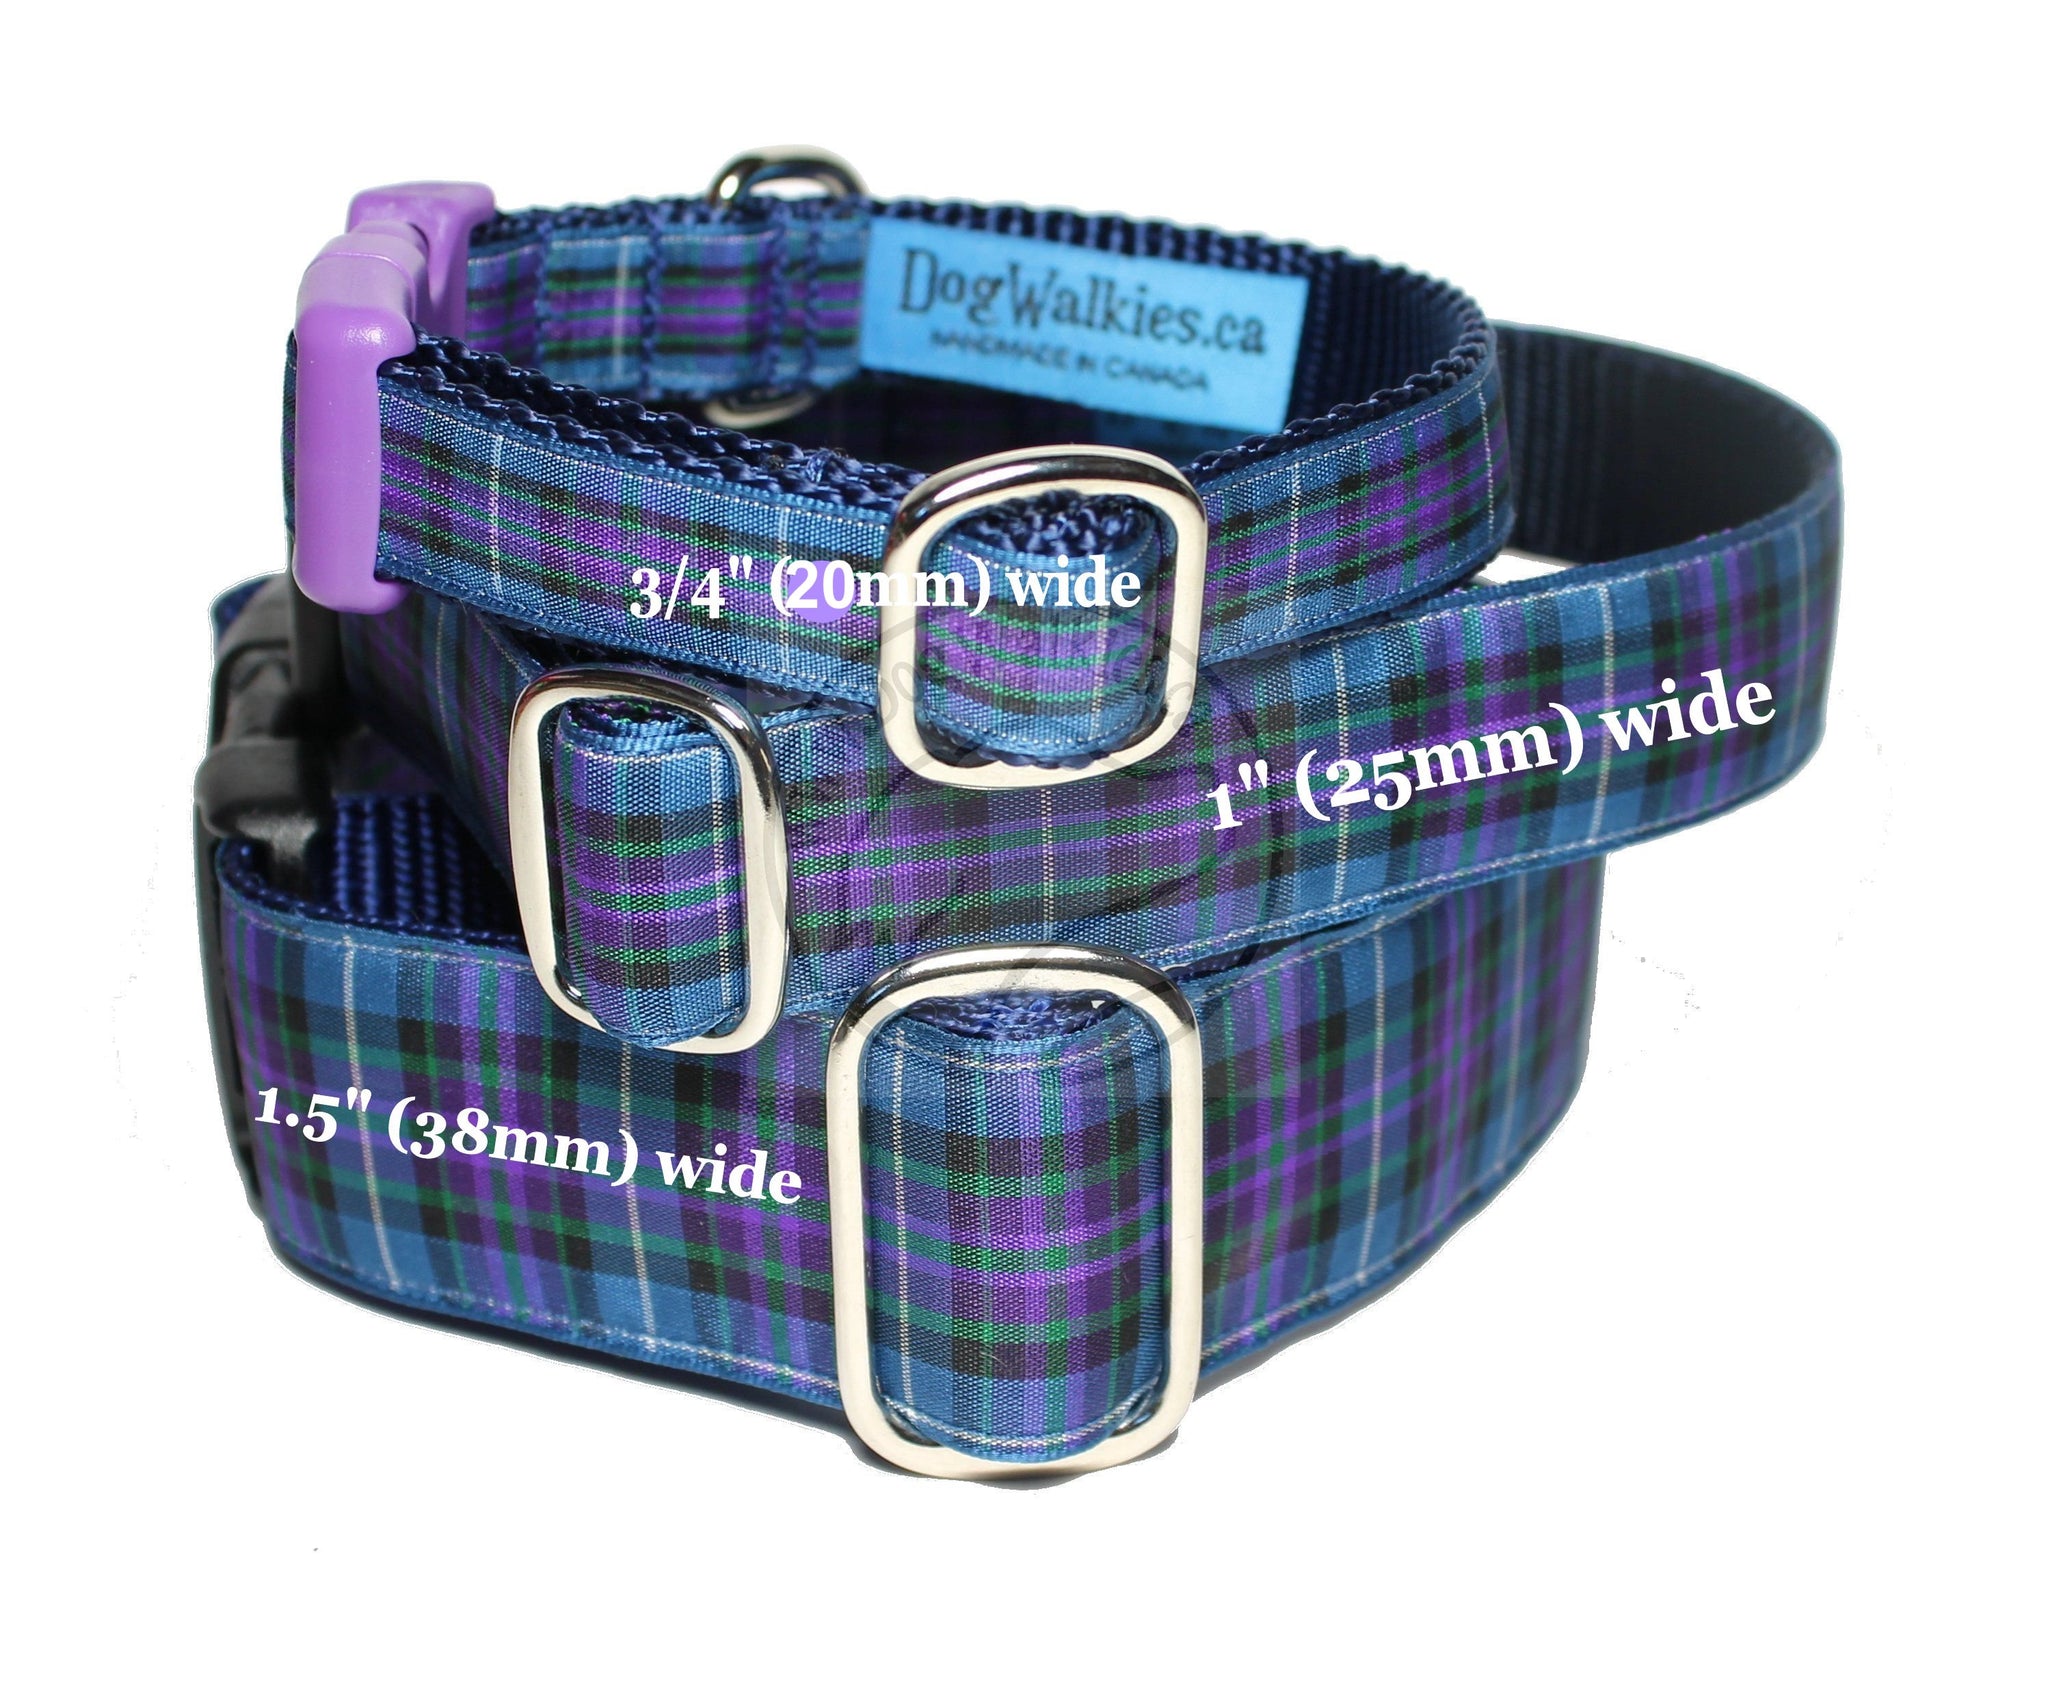 Pride of Scotland Ancient tartan - dog collar